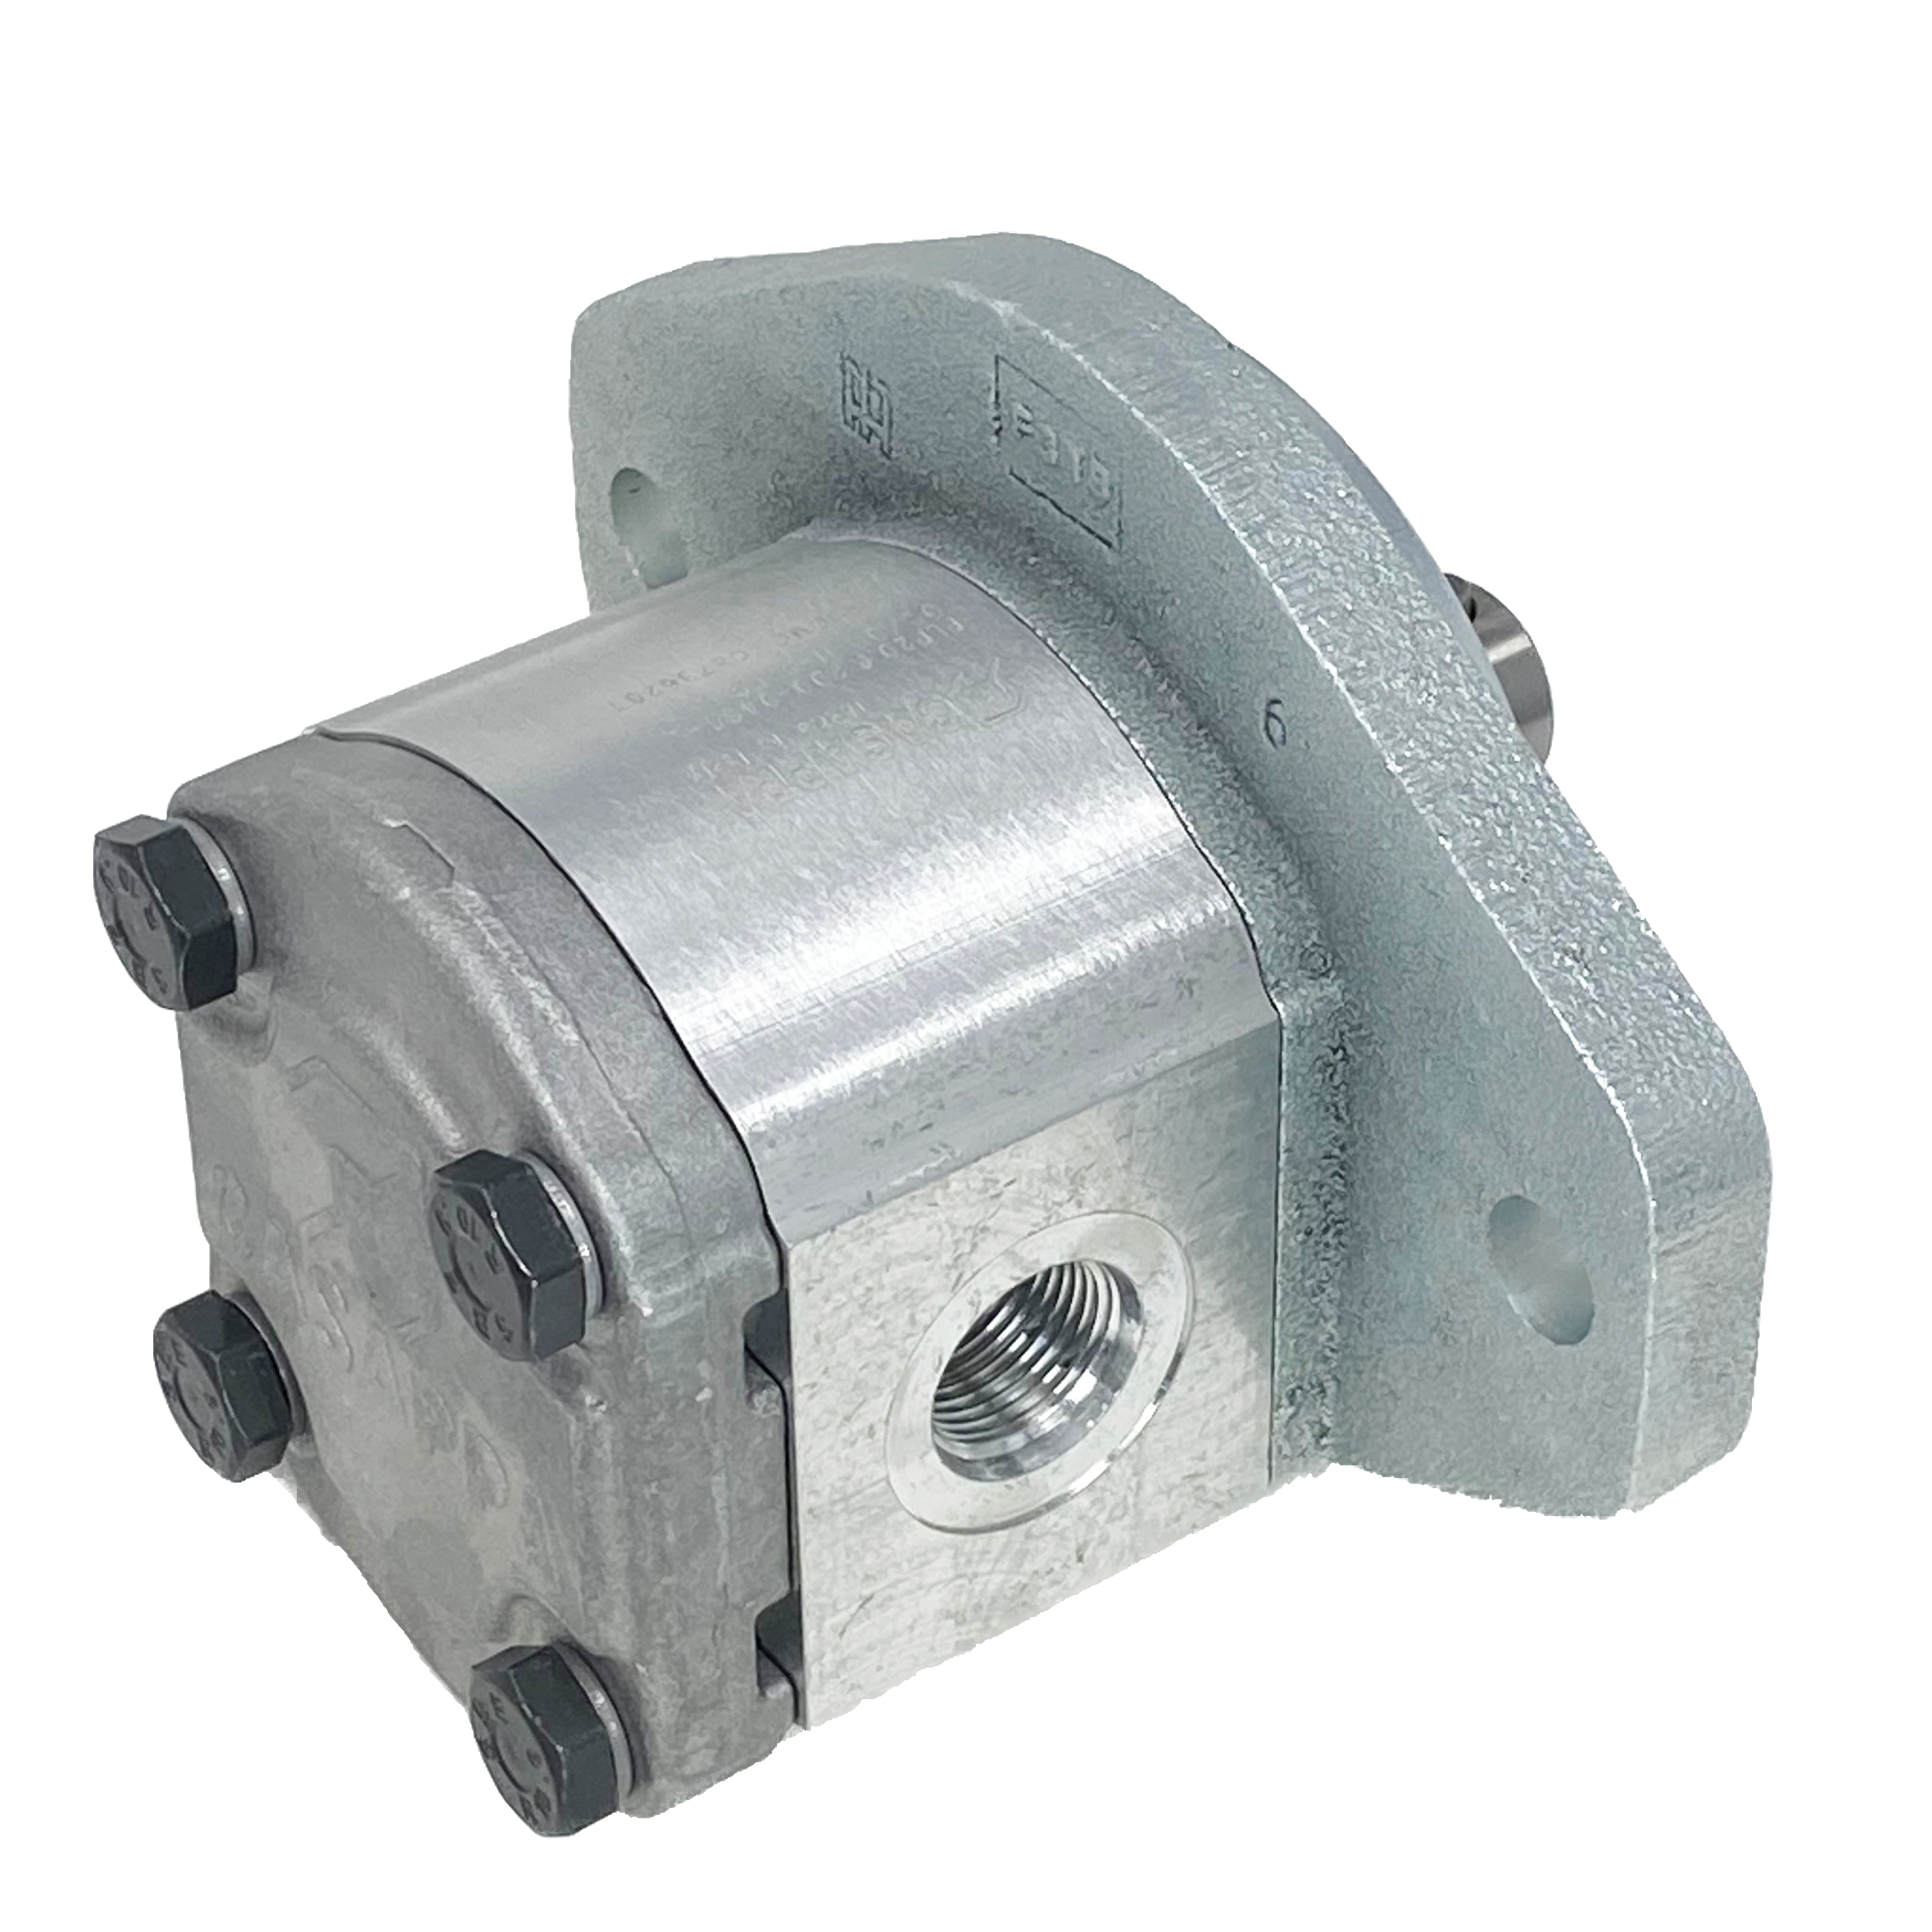 PLM20.11,2R0-31S1-LOC/OC-N-EL : Casappa Polaris Gear Motor, 11.23cc, 3625psi Rated, 3500RPM, Reversible Rear External Drain, 5/8" Bore x 5/32" Key Shaft, SAE A 2-Bolt Flange, 0.625 (5/8") #10 SAE Inlet, 0.625 (5/8") #10 SAE Outlet, Aluminum Body & Flange